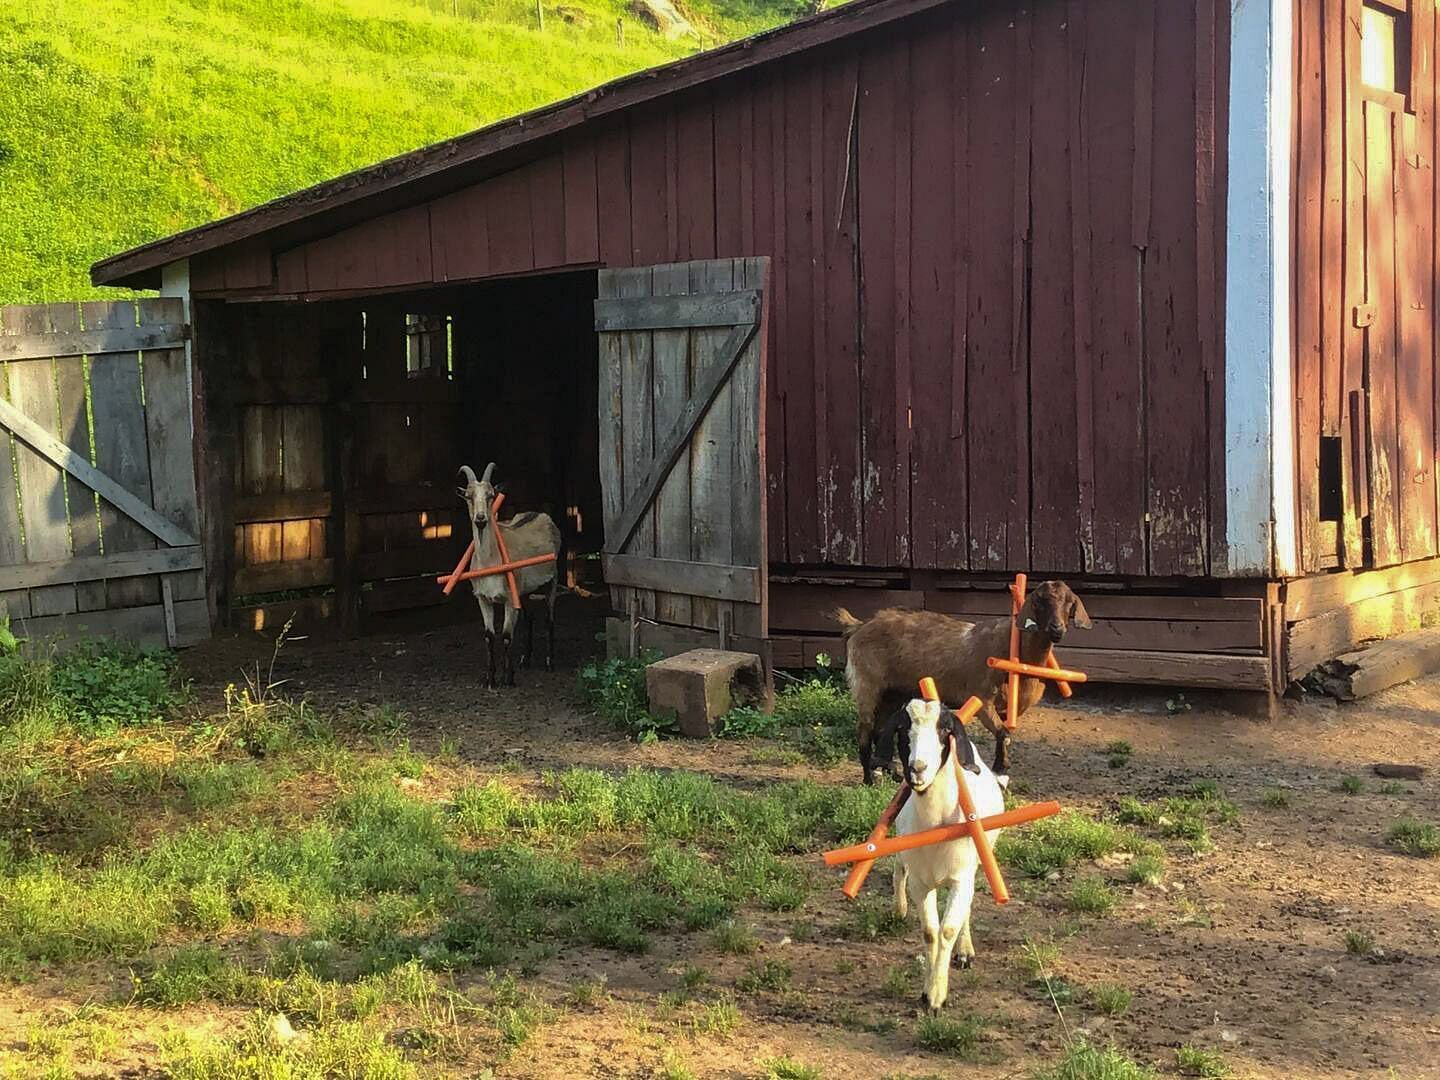 JWguest Rental unit at LeRoy, West Virginia | The Farm - Cottage On The Hill | Jwbnb no brobnb 38